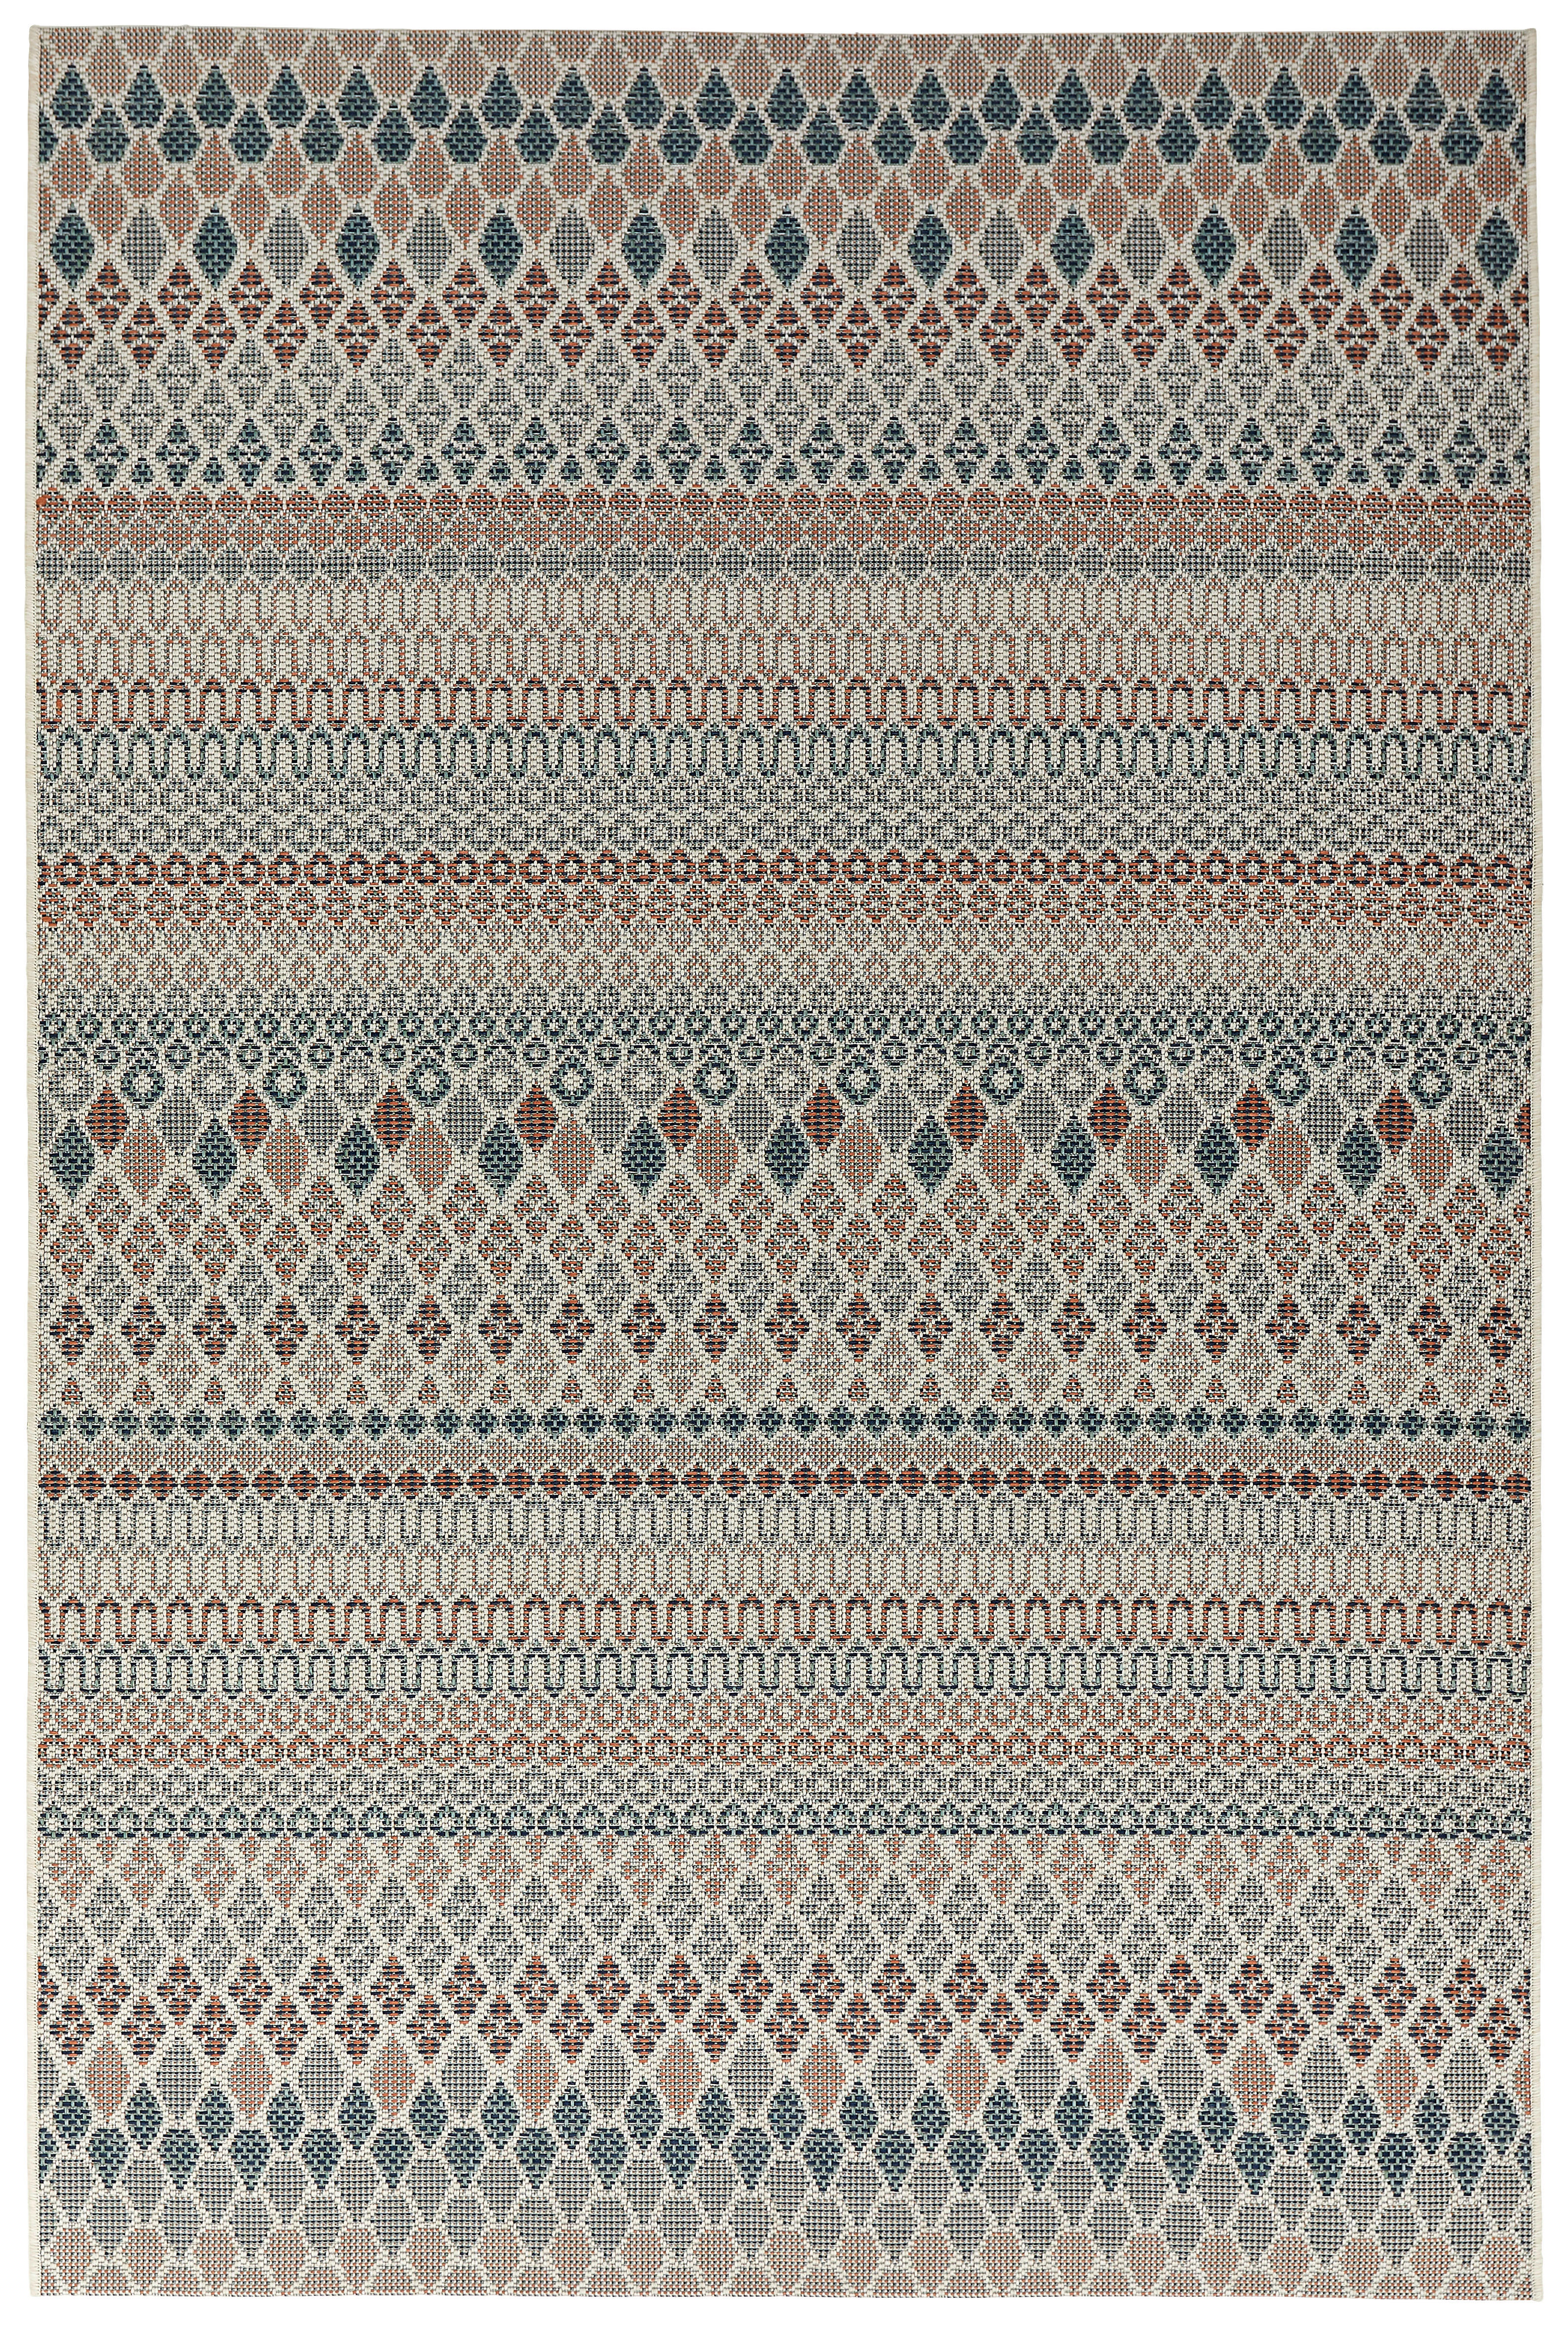 In- und Outdoorteppich  120/170 cm  Multicolor   - Multicolor, Design, Textil (120/170cm) - Novel